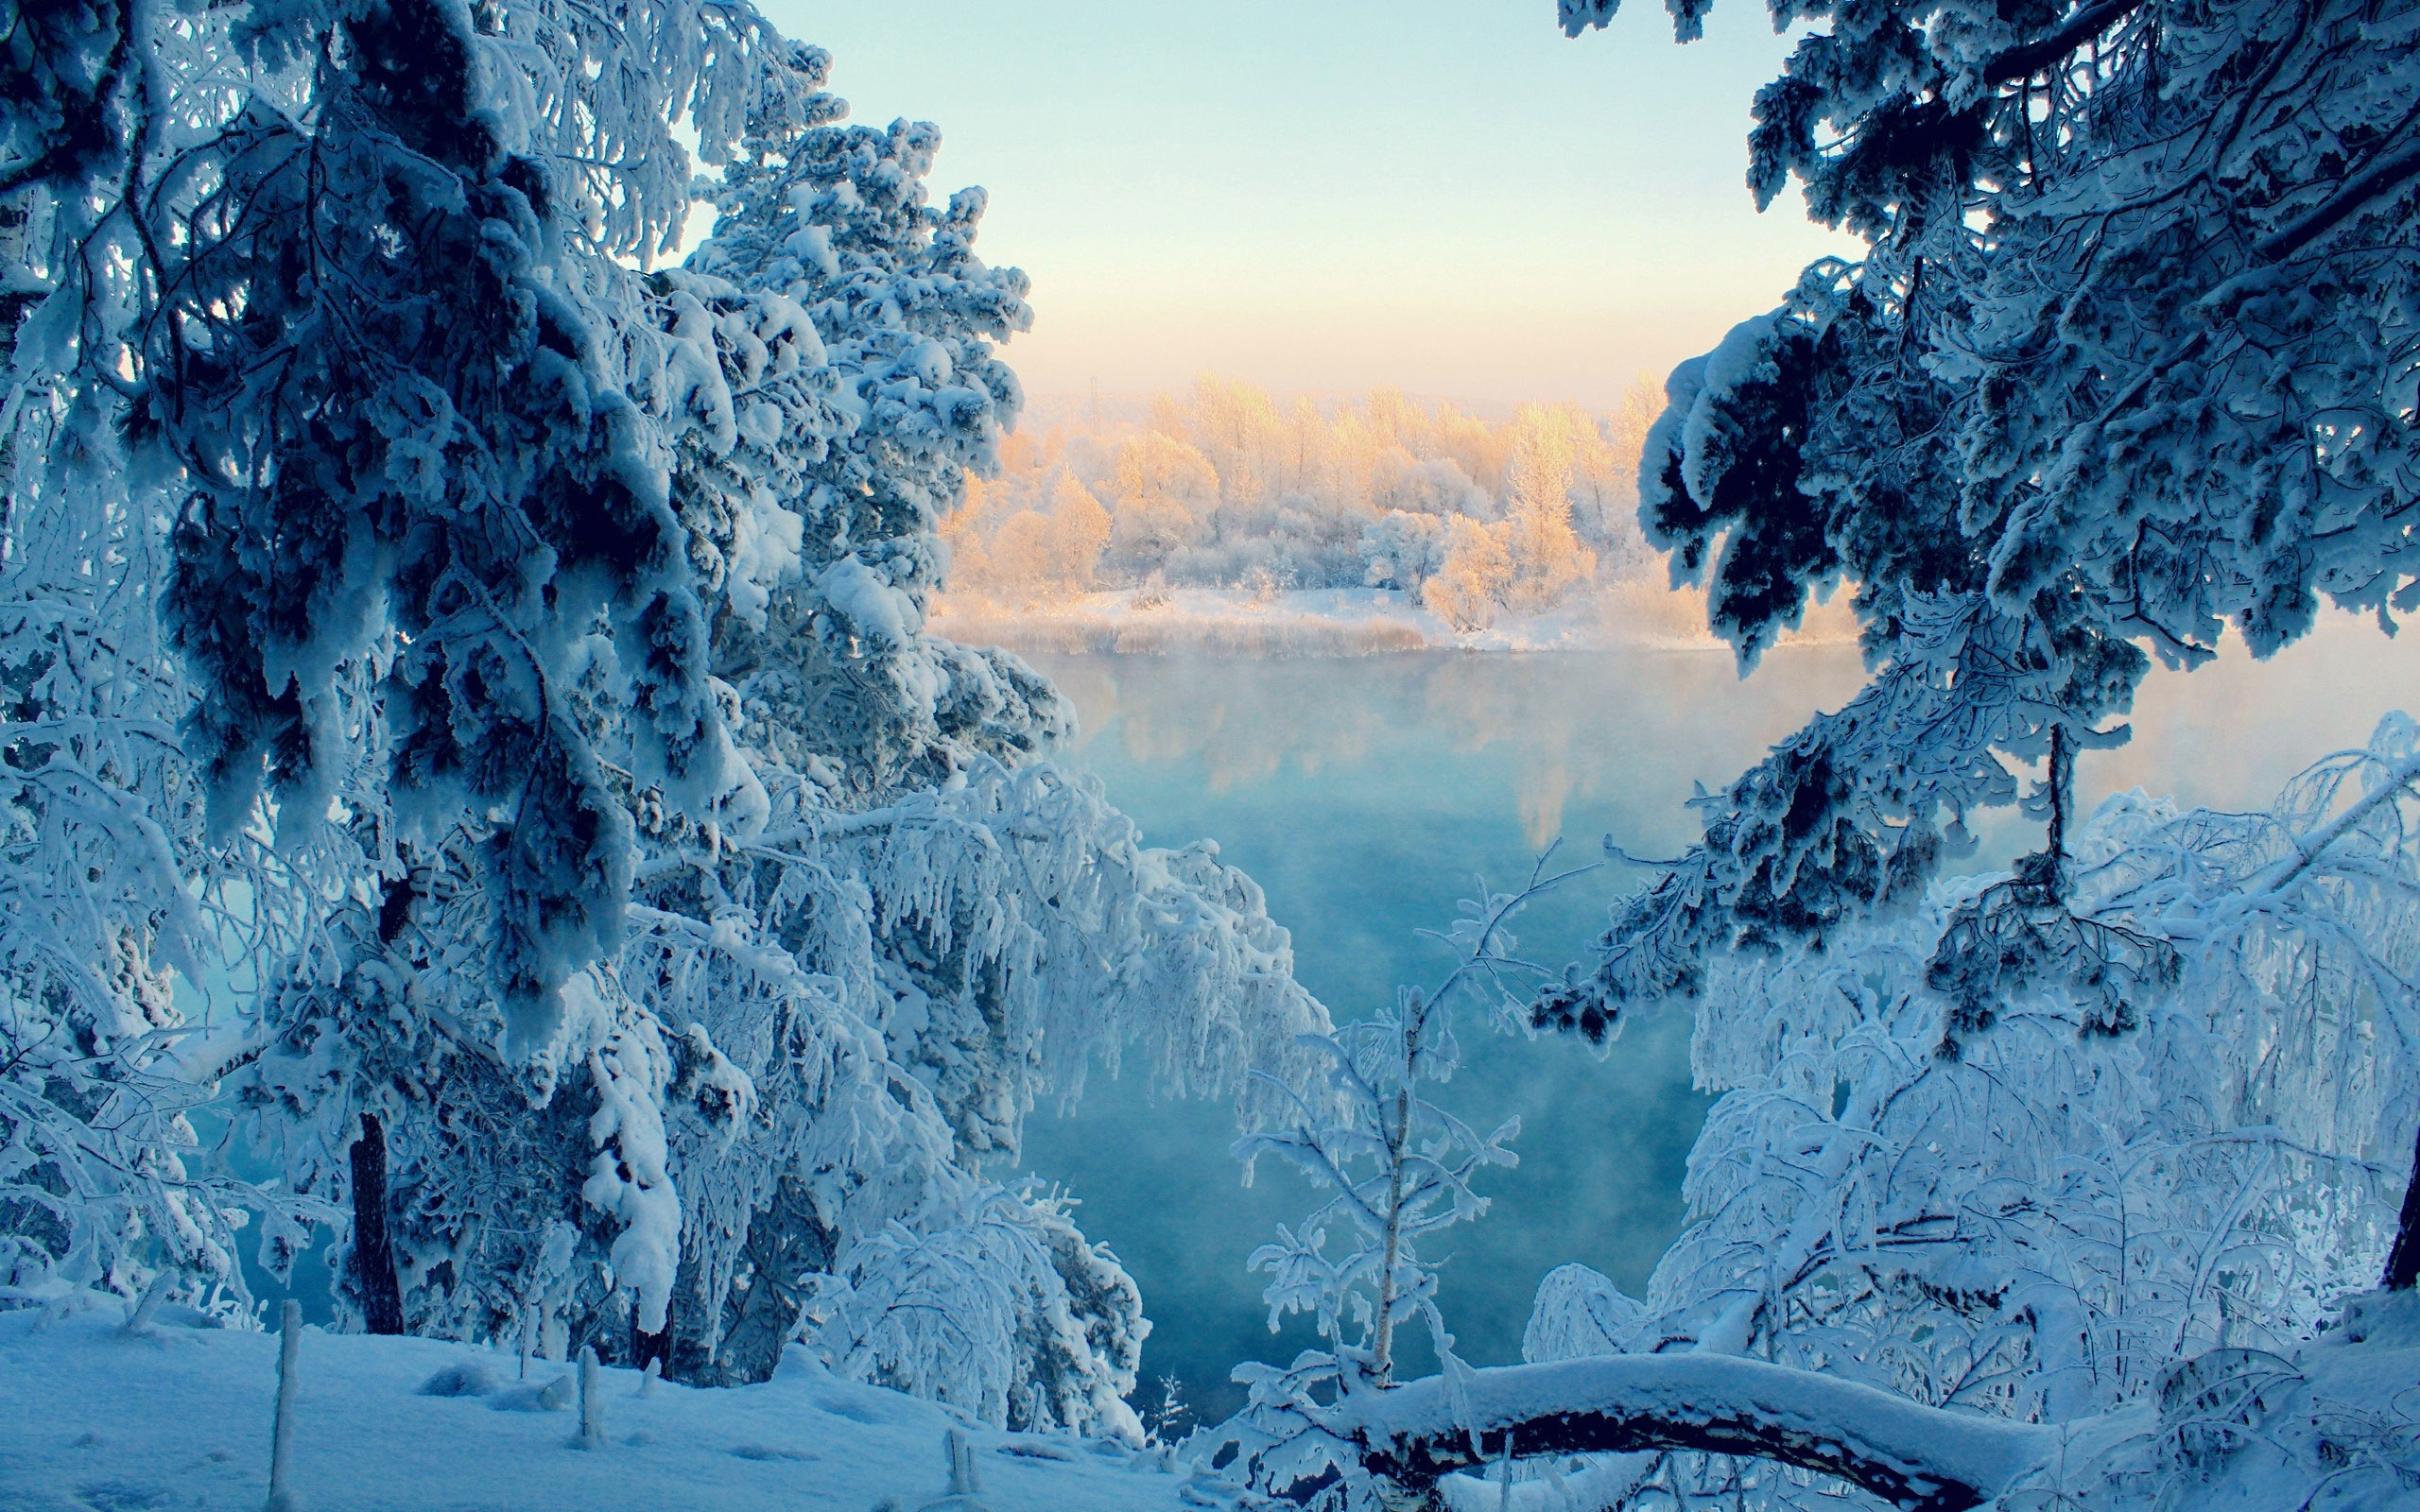 Картинки на заставку. Зимний лес. Сказочный зимний лес. Красивая зима. Зимняя сказка.